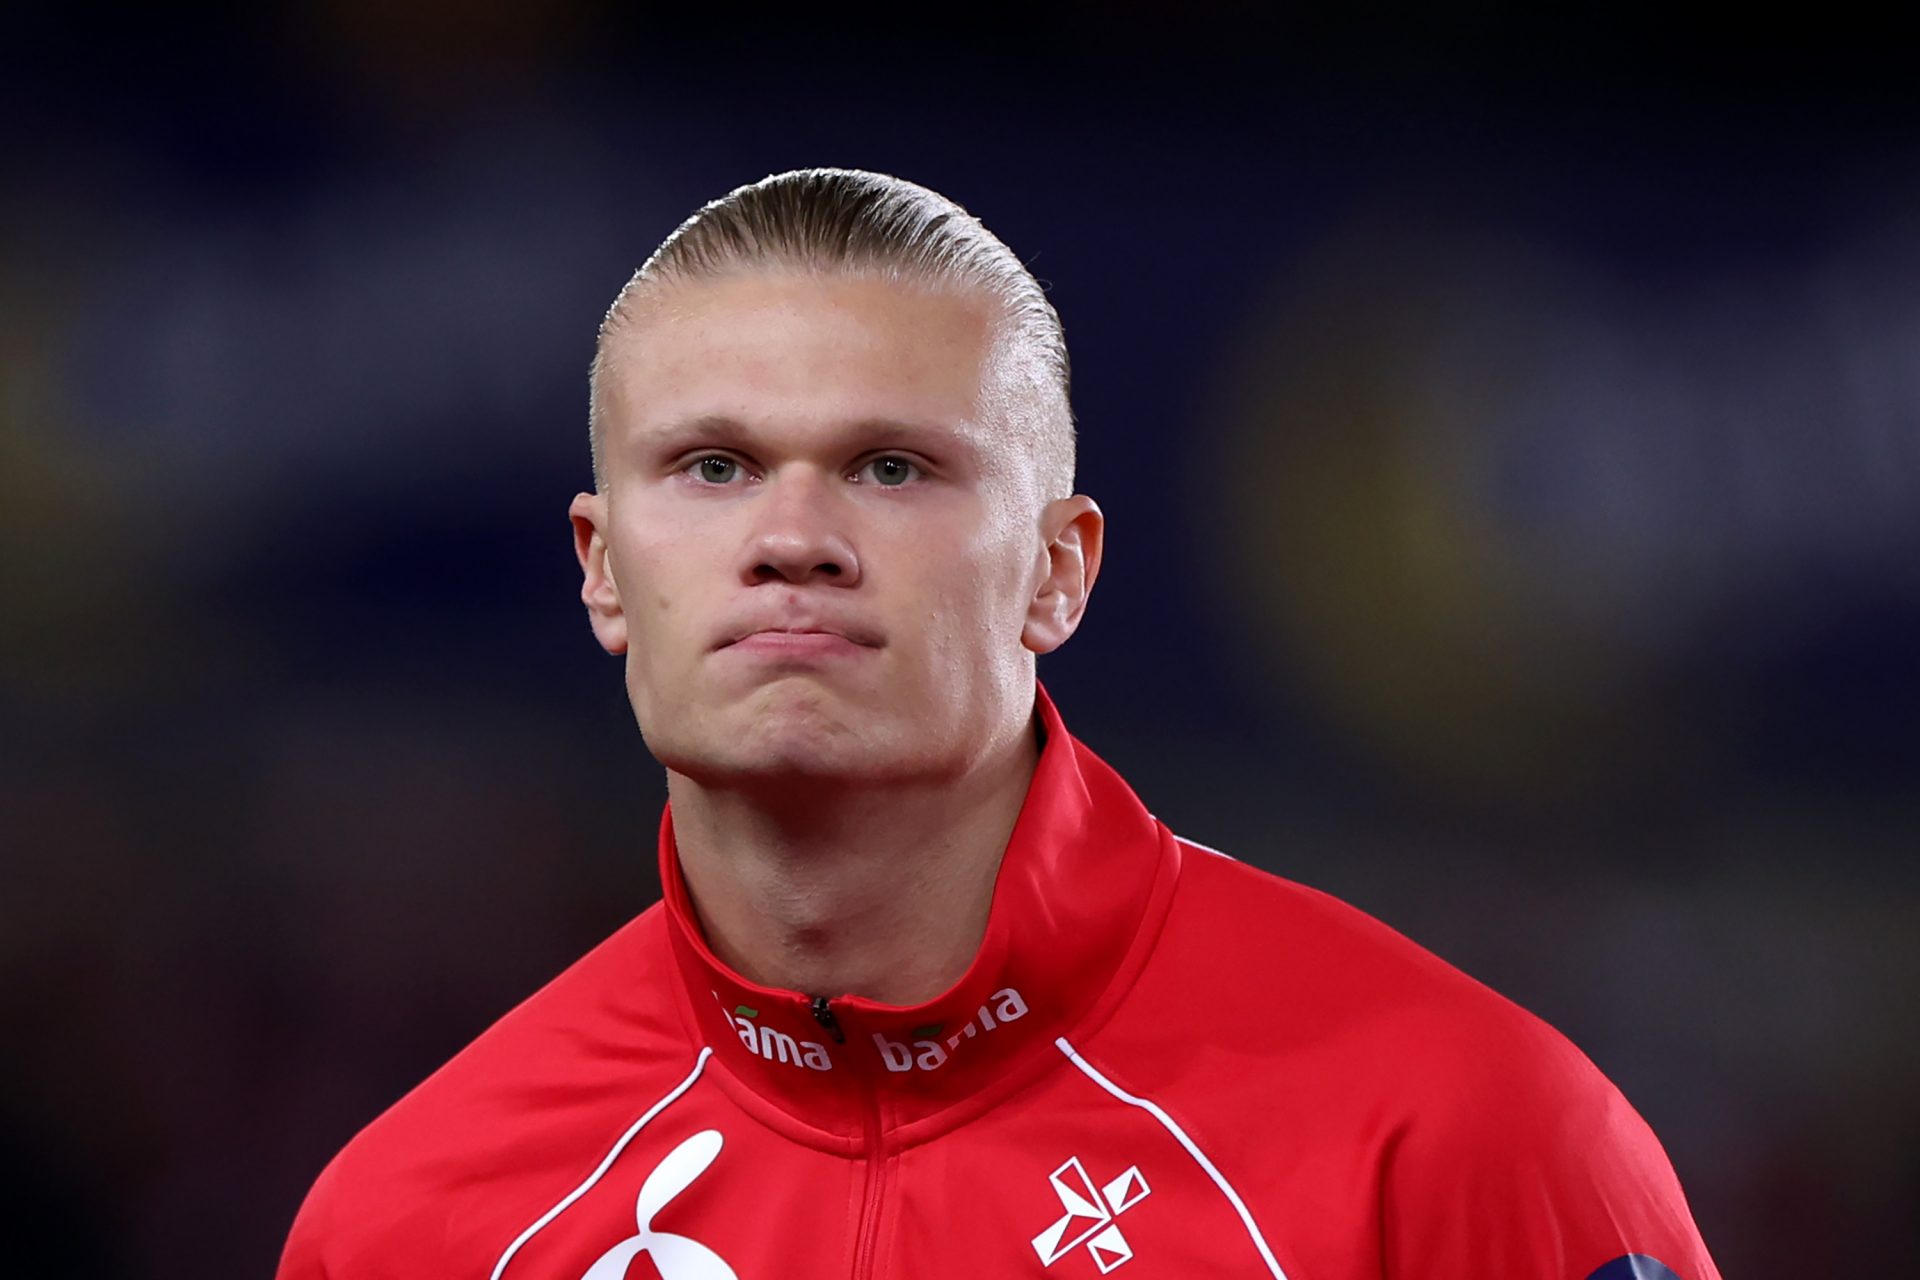 16 goals in 14 games for Norway